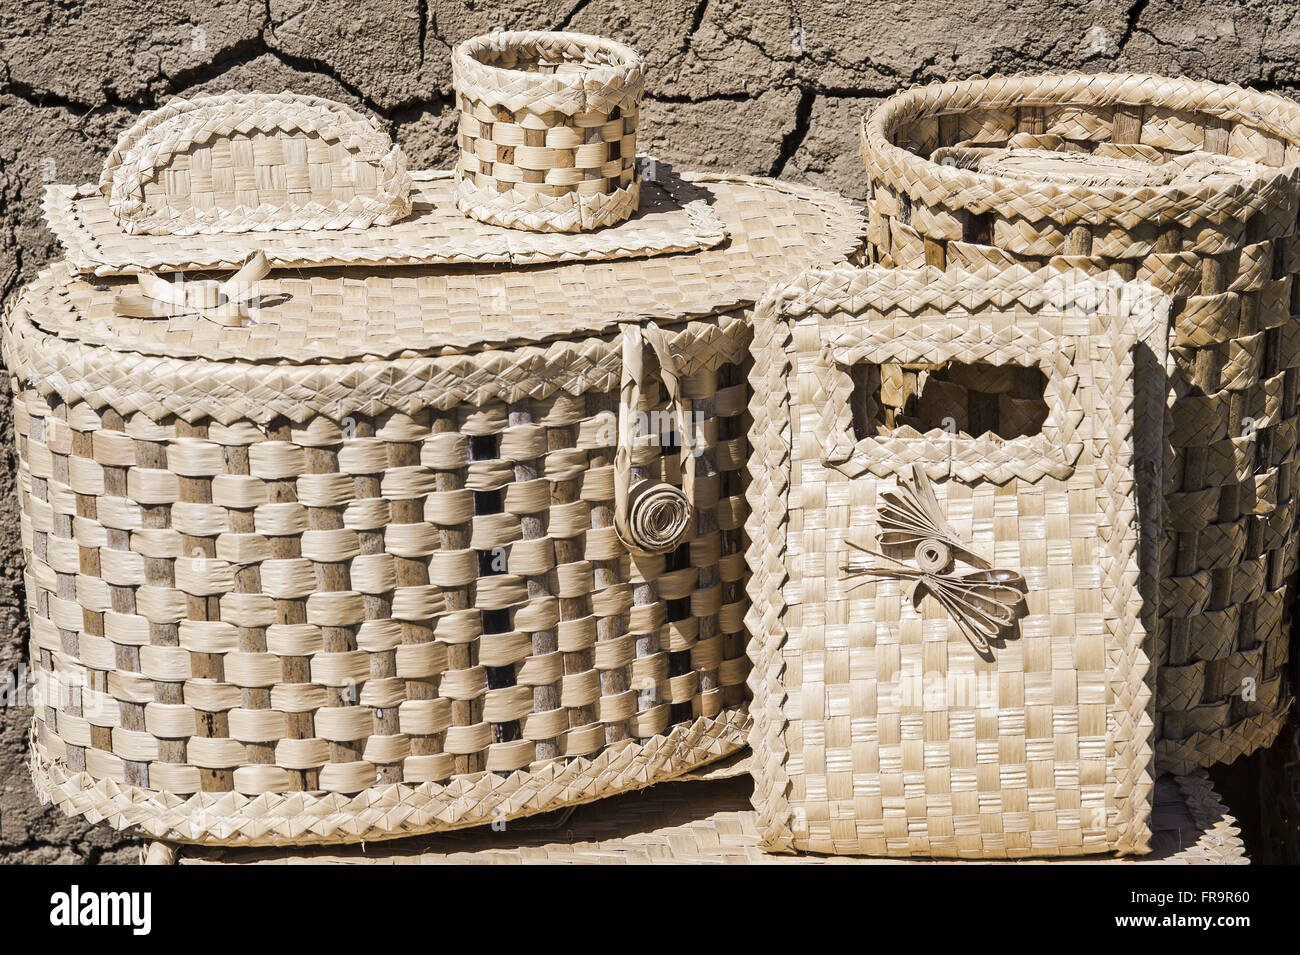 Carnauba straw crafts Stock Photo